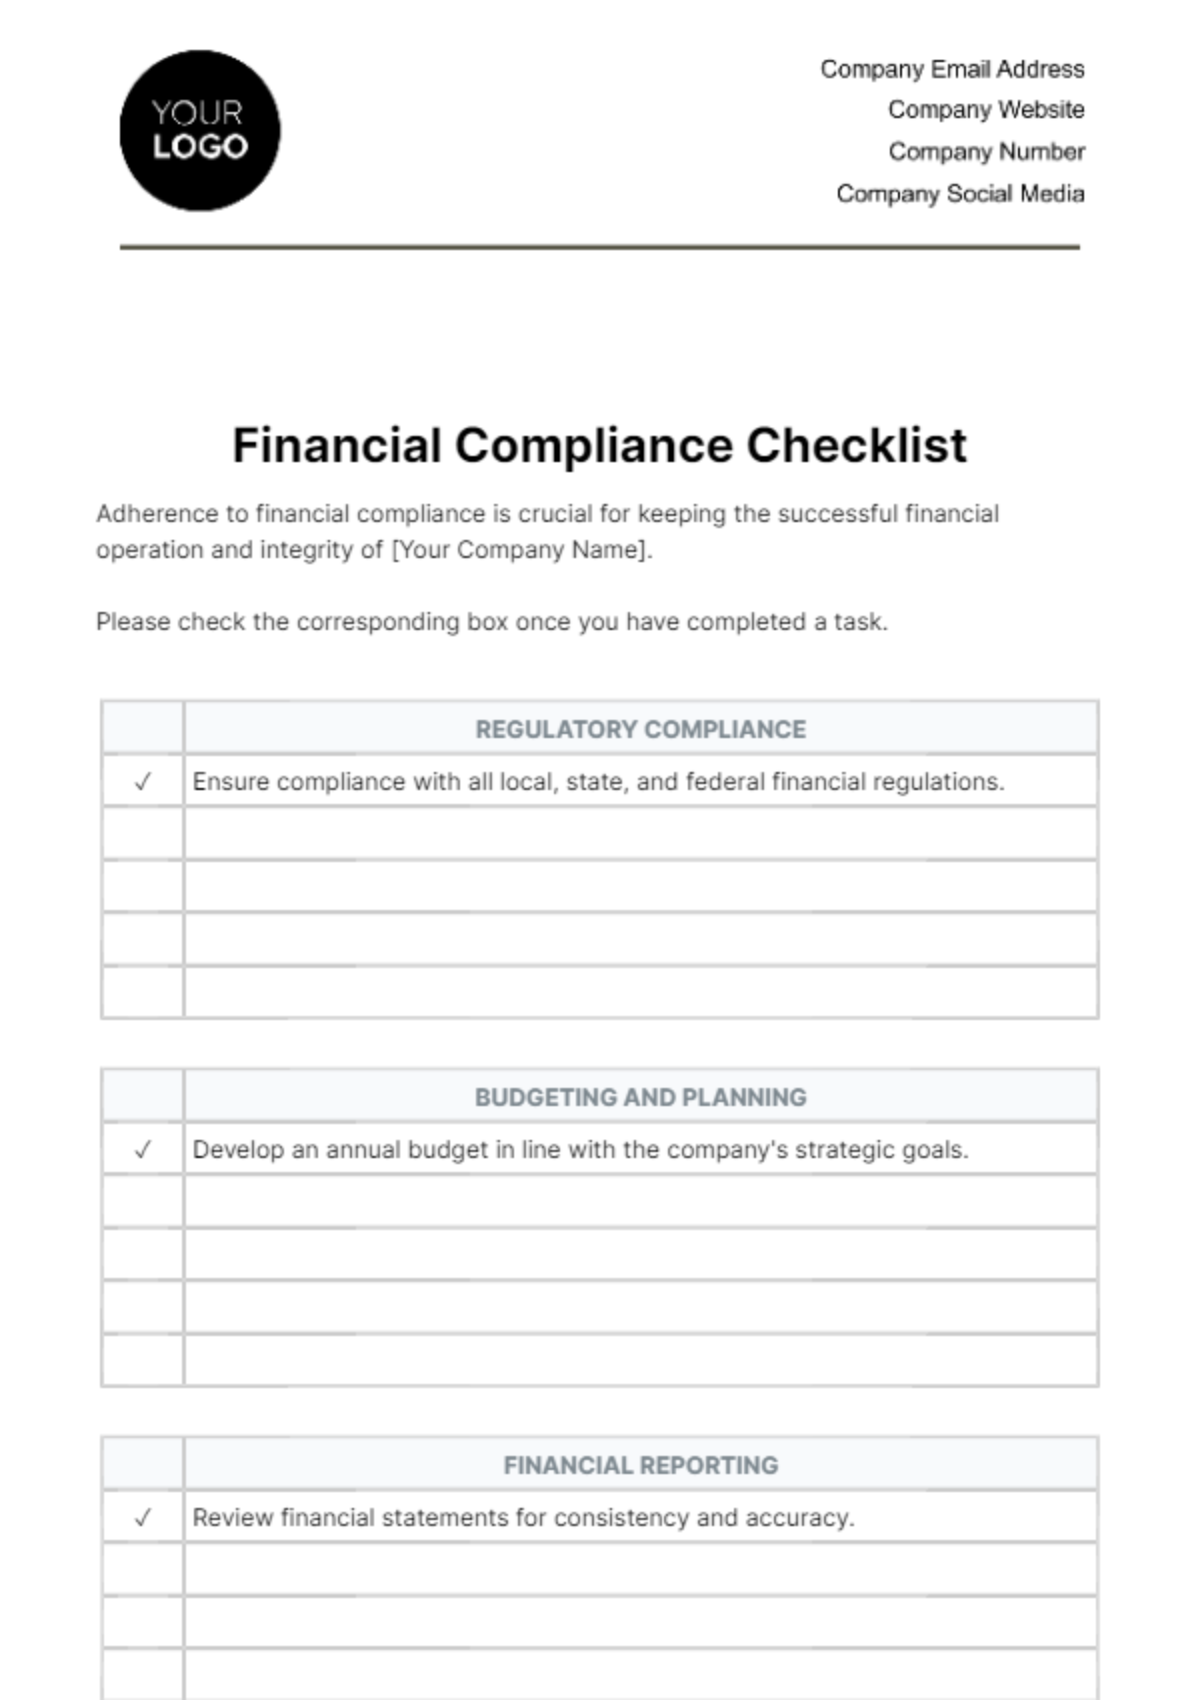 Financial Compliance Checklist Template